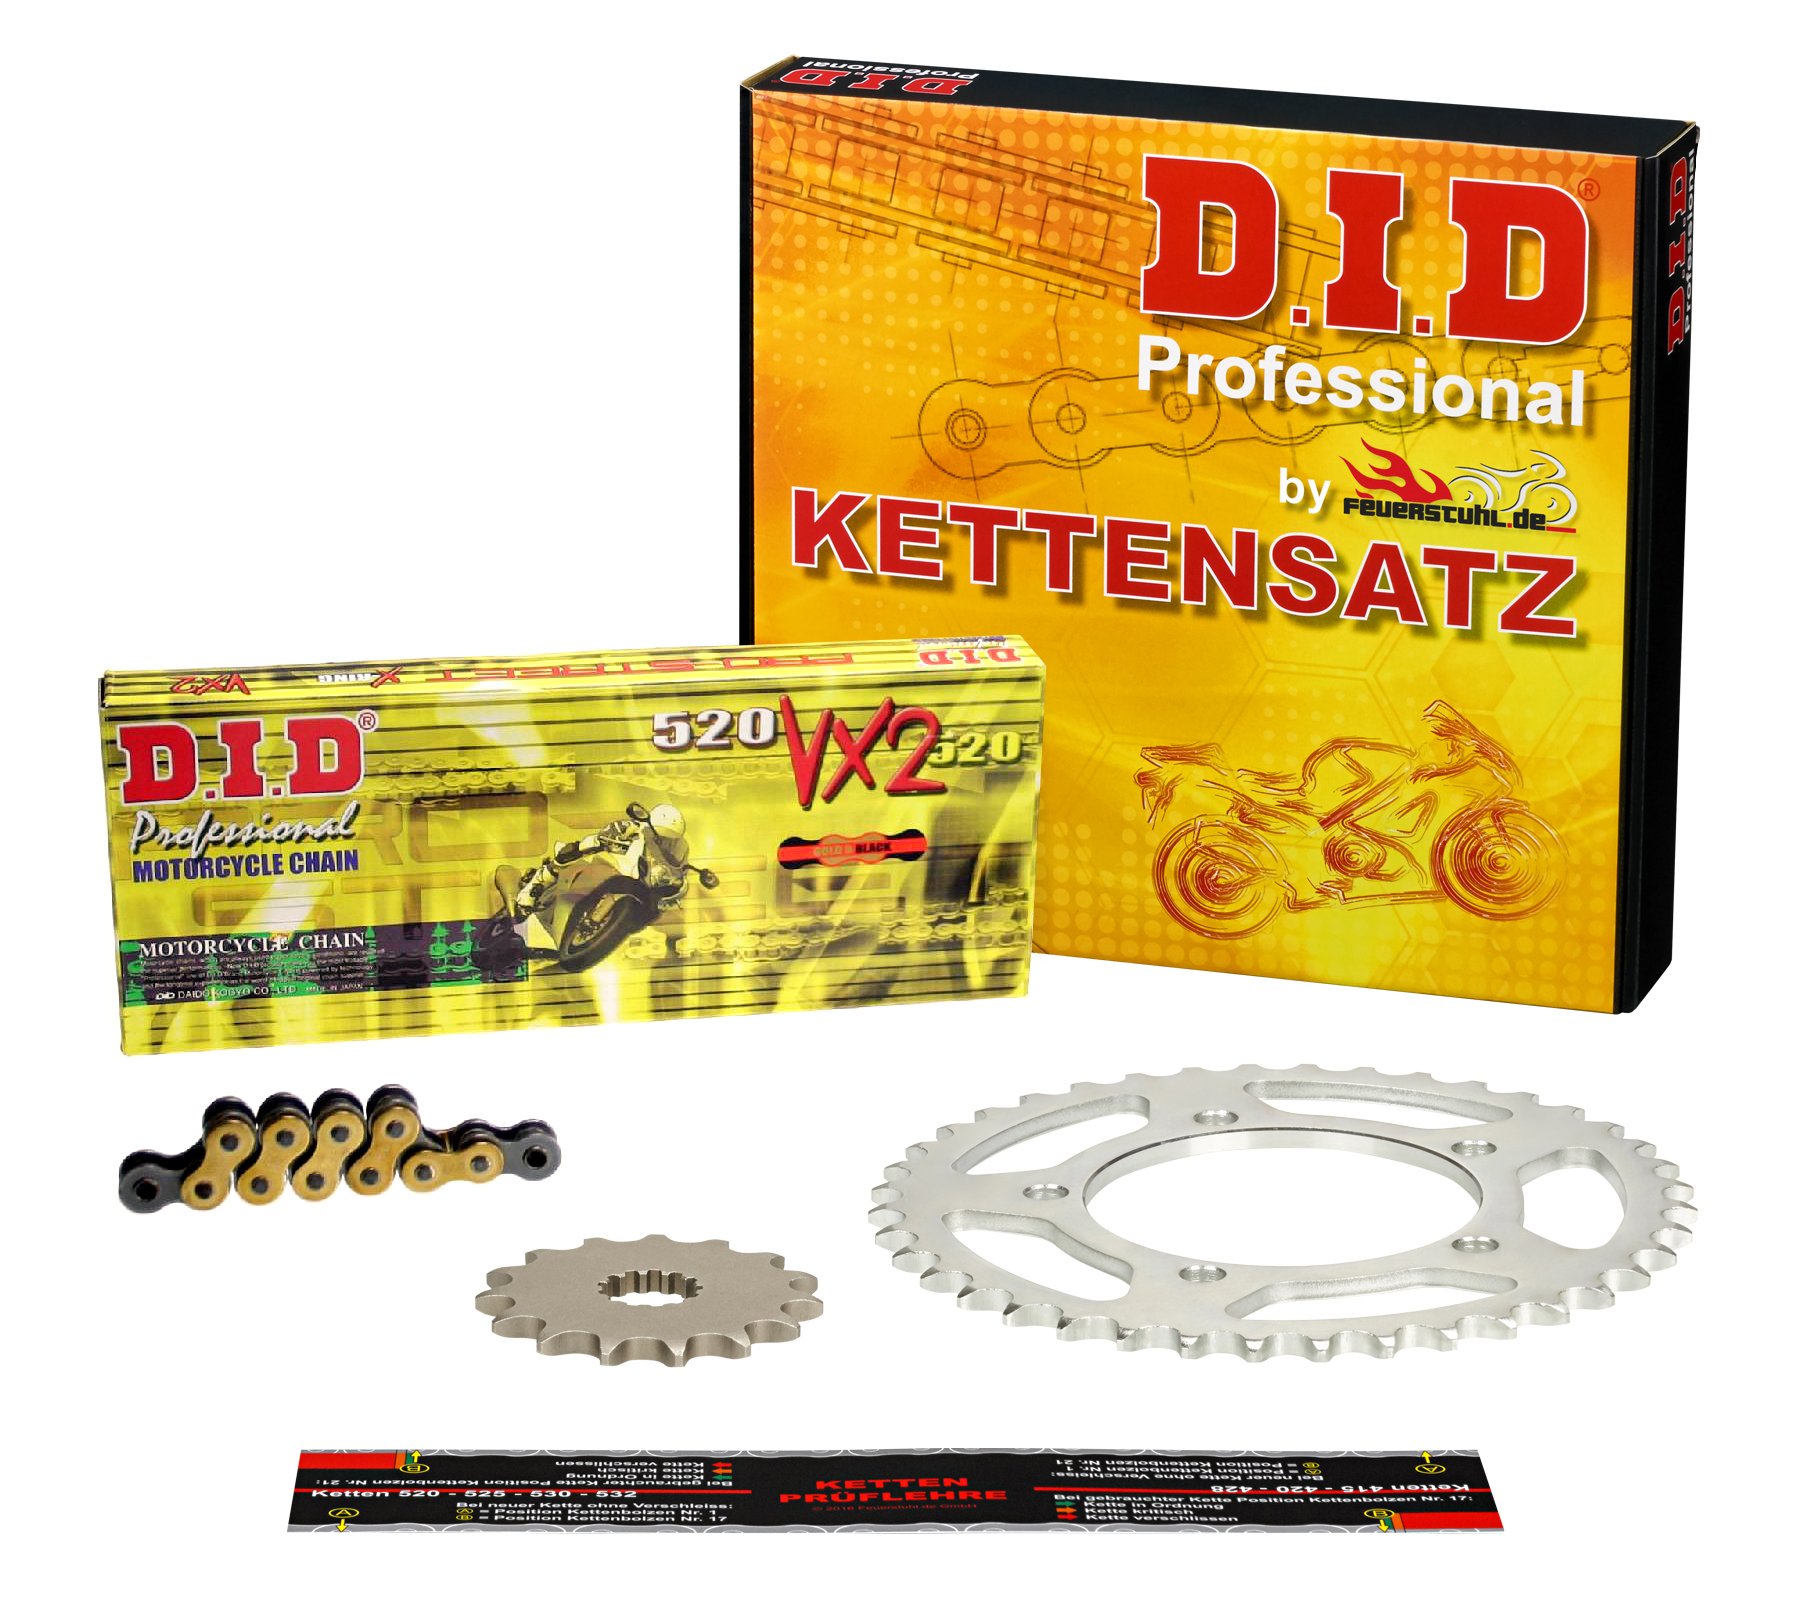 Kettensatz Aprilia RS 125 Extrema, 2006-2013, PY, RD, RM, DID X-Ring (VX2 gold) extra verstärkt von Feuerstuhl.de GmbH